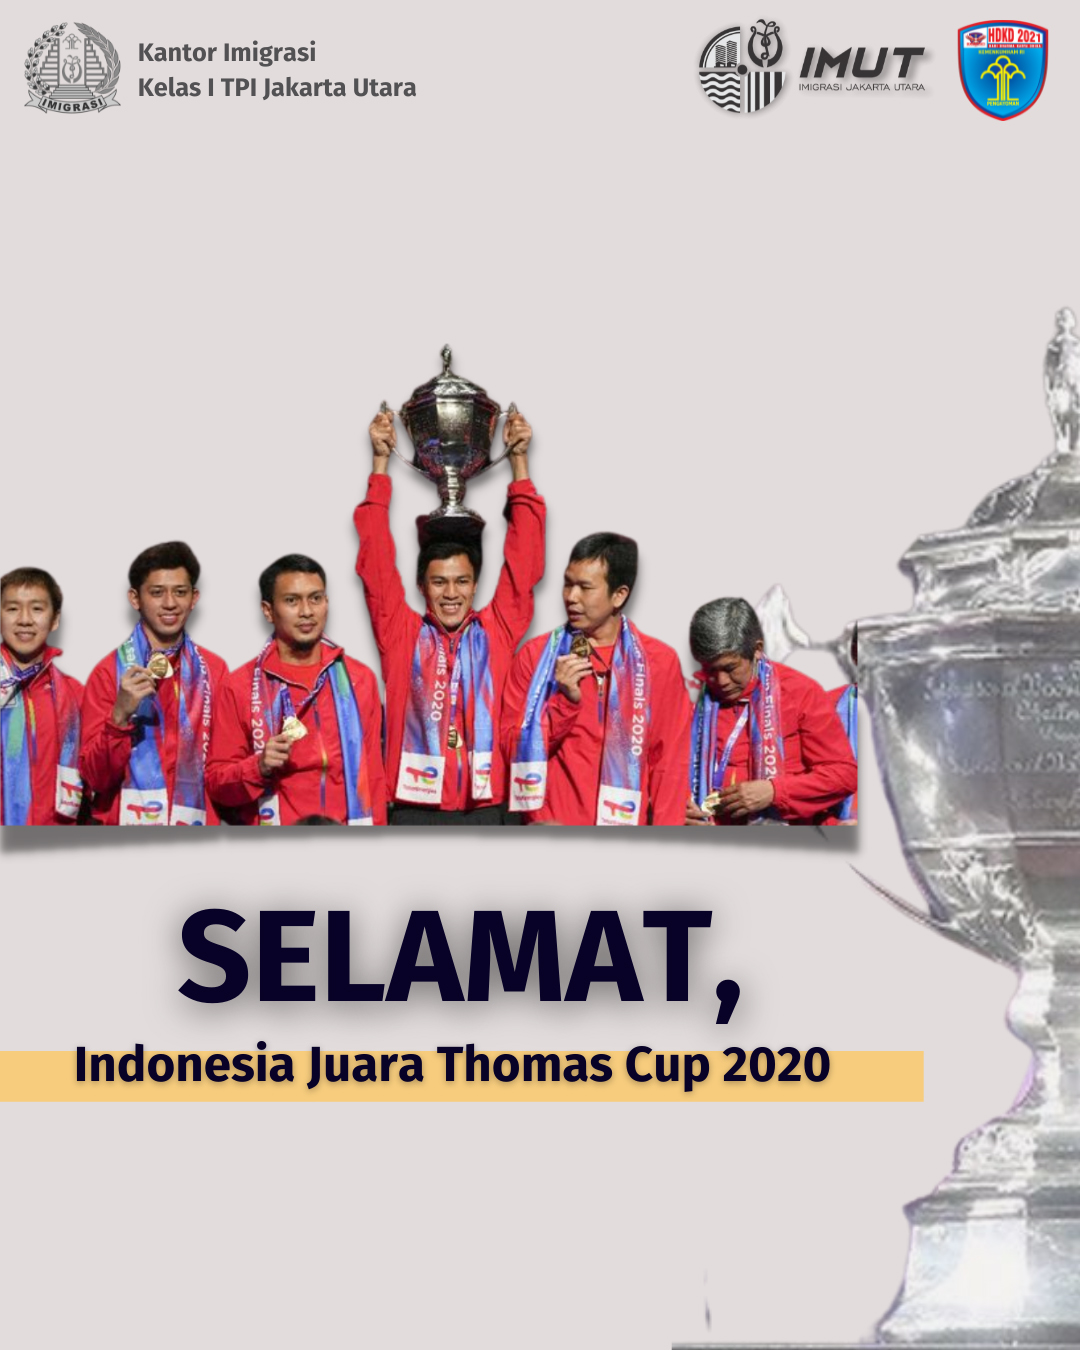 Thomas cup 2020